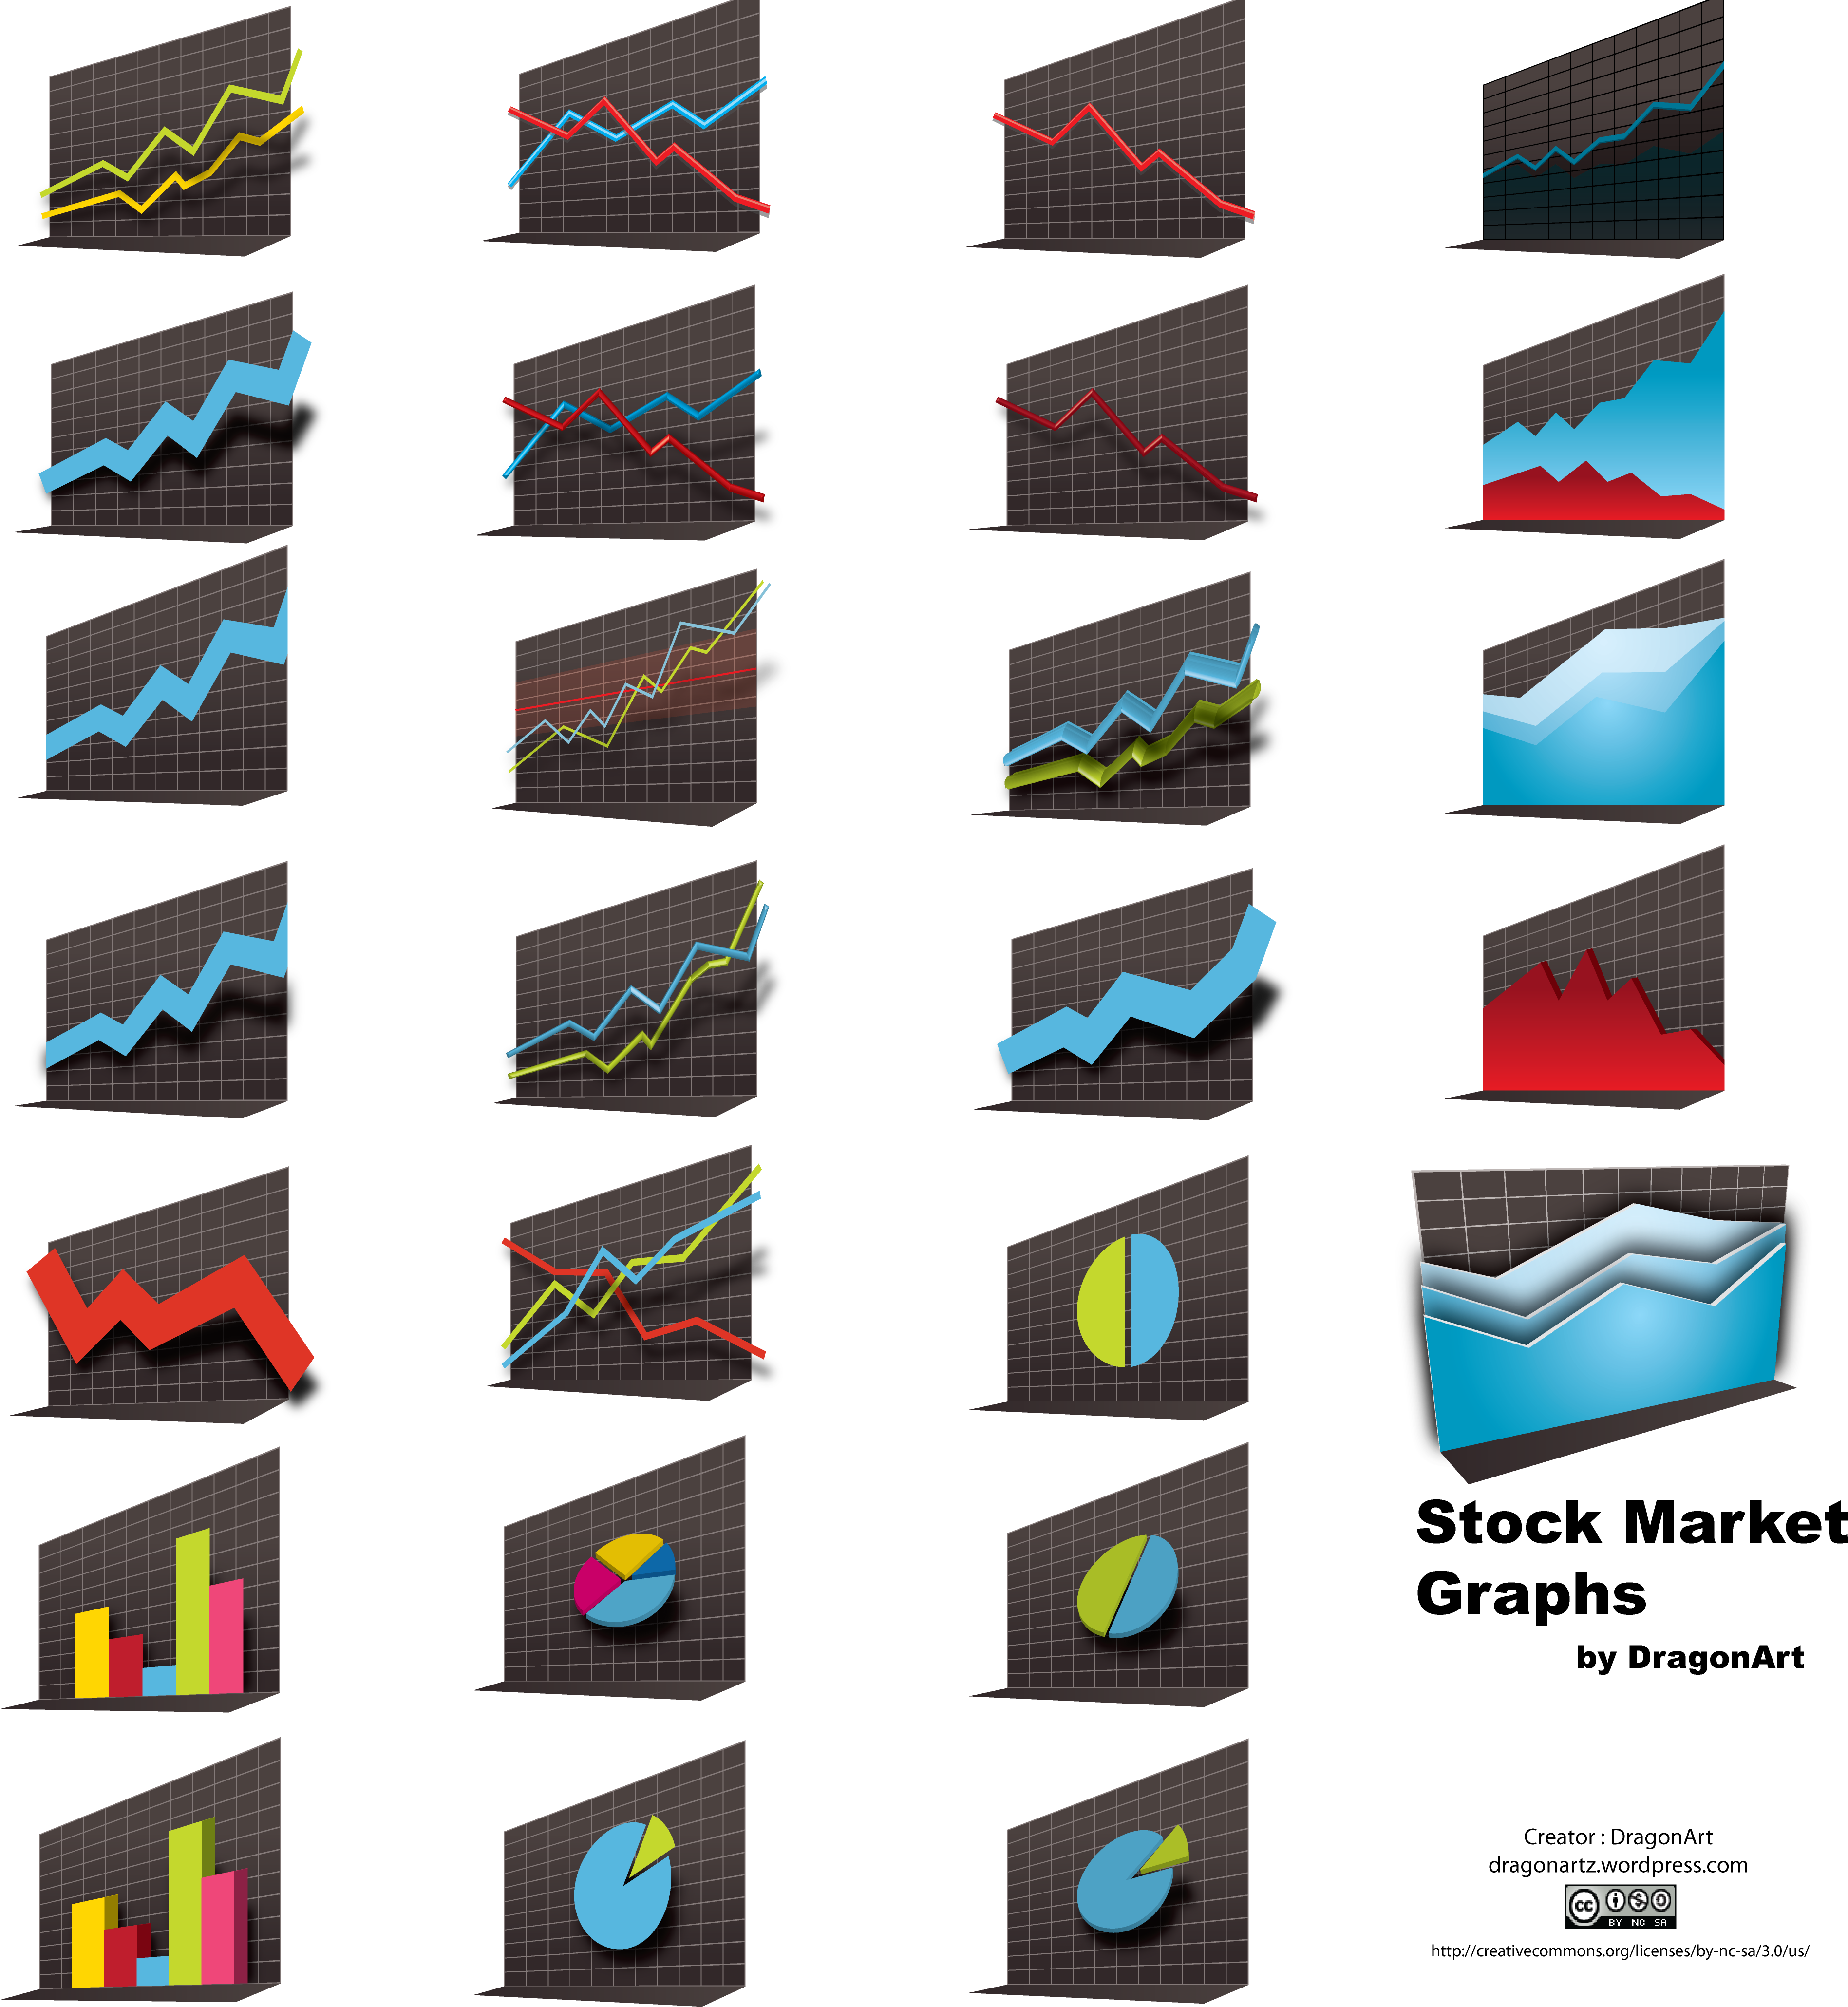 Vector Stock Market Graphs 3d By Dragonart - Stock Market Graph Vector (4167x4167)